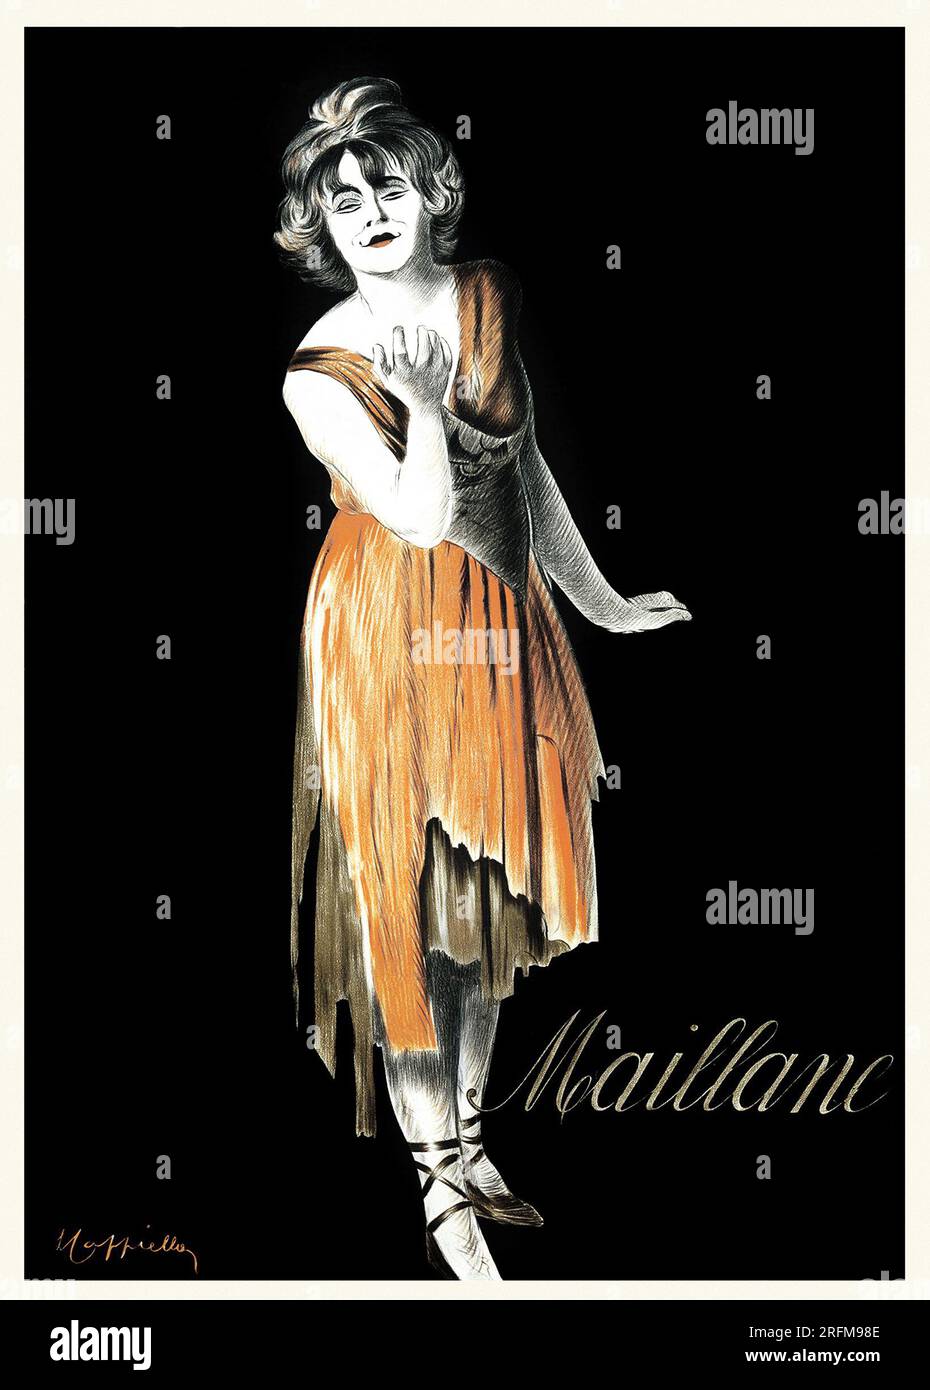 Maillane, c 1912 - Vintage advertisement poster by Leonetto Cappiello Stock Photo